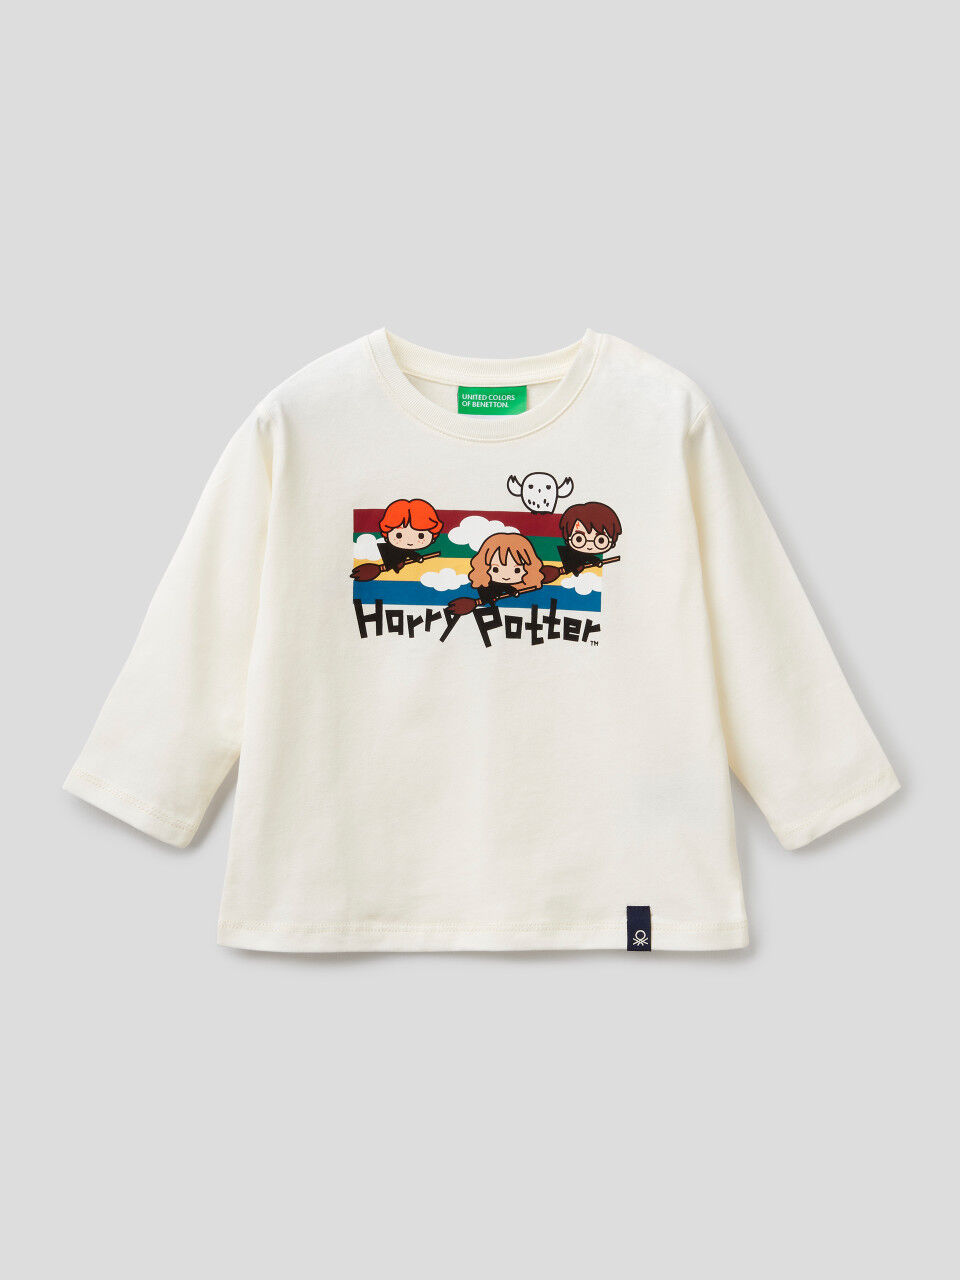 Historicus Oordeel school Kid Boys' T-shirts and Shirts Sale Collection 2021 | Benetton